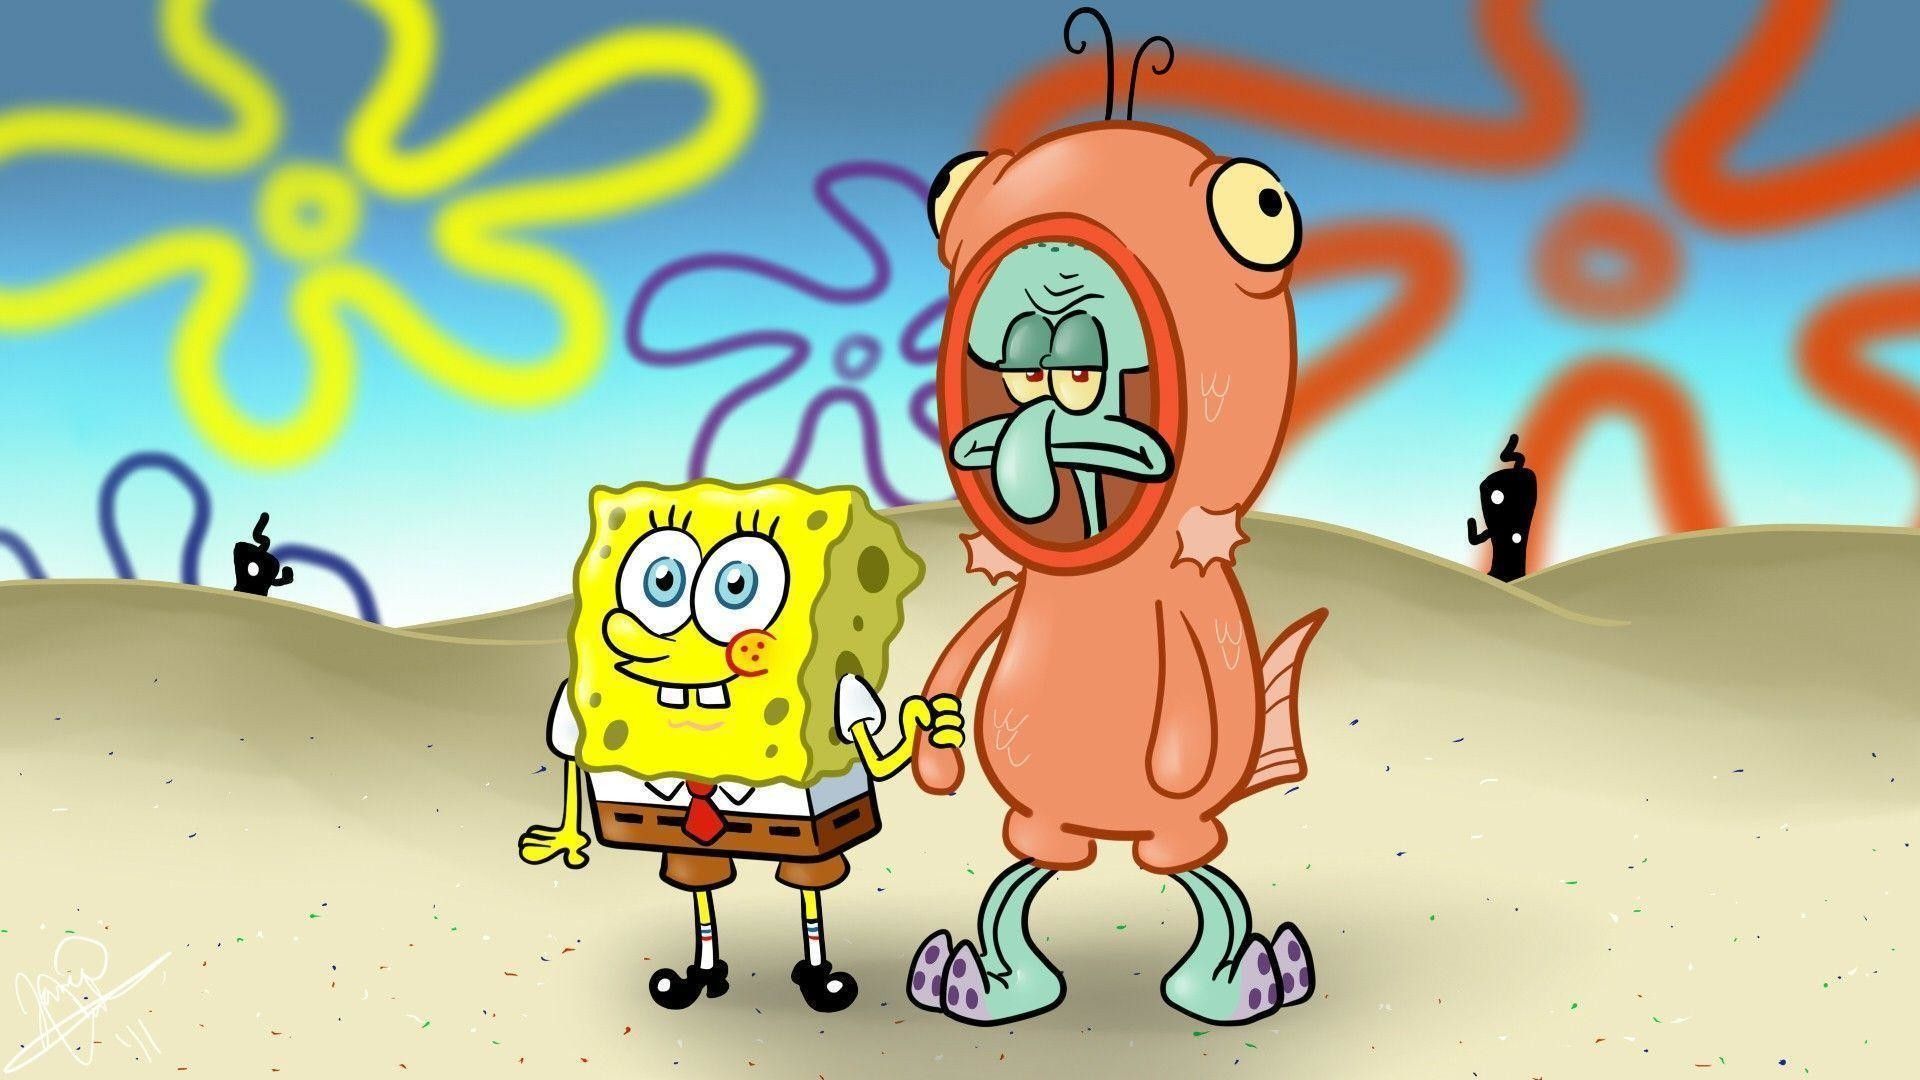 SpongeBob and Squidward walking on the beach. - Squidward, SpongeBob